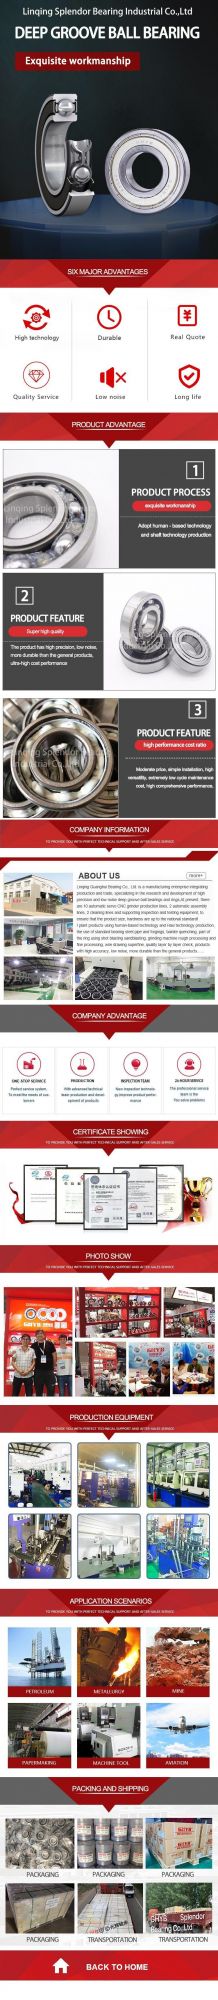 China Factory Distributor Supplier of Deep Groove Ball Bearings for Motors, Compressors, Alternators 6310-2rz/P6/Z2V2